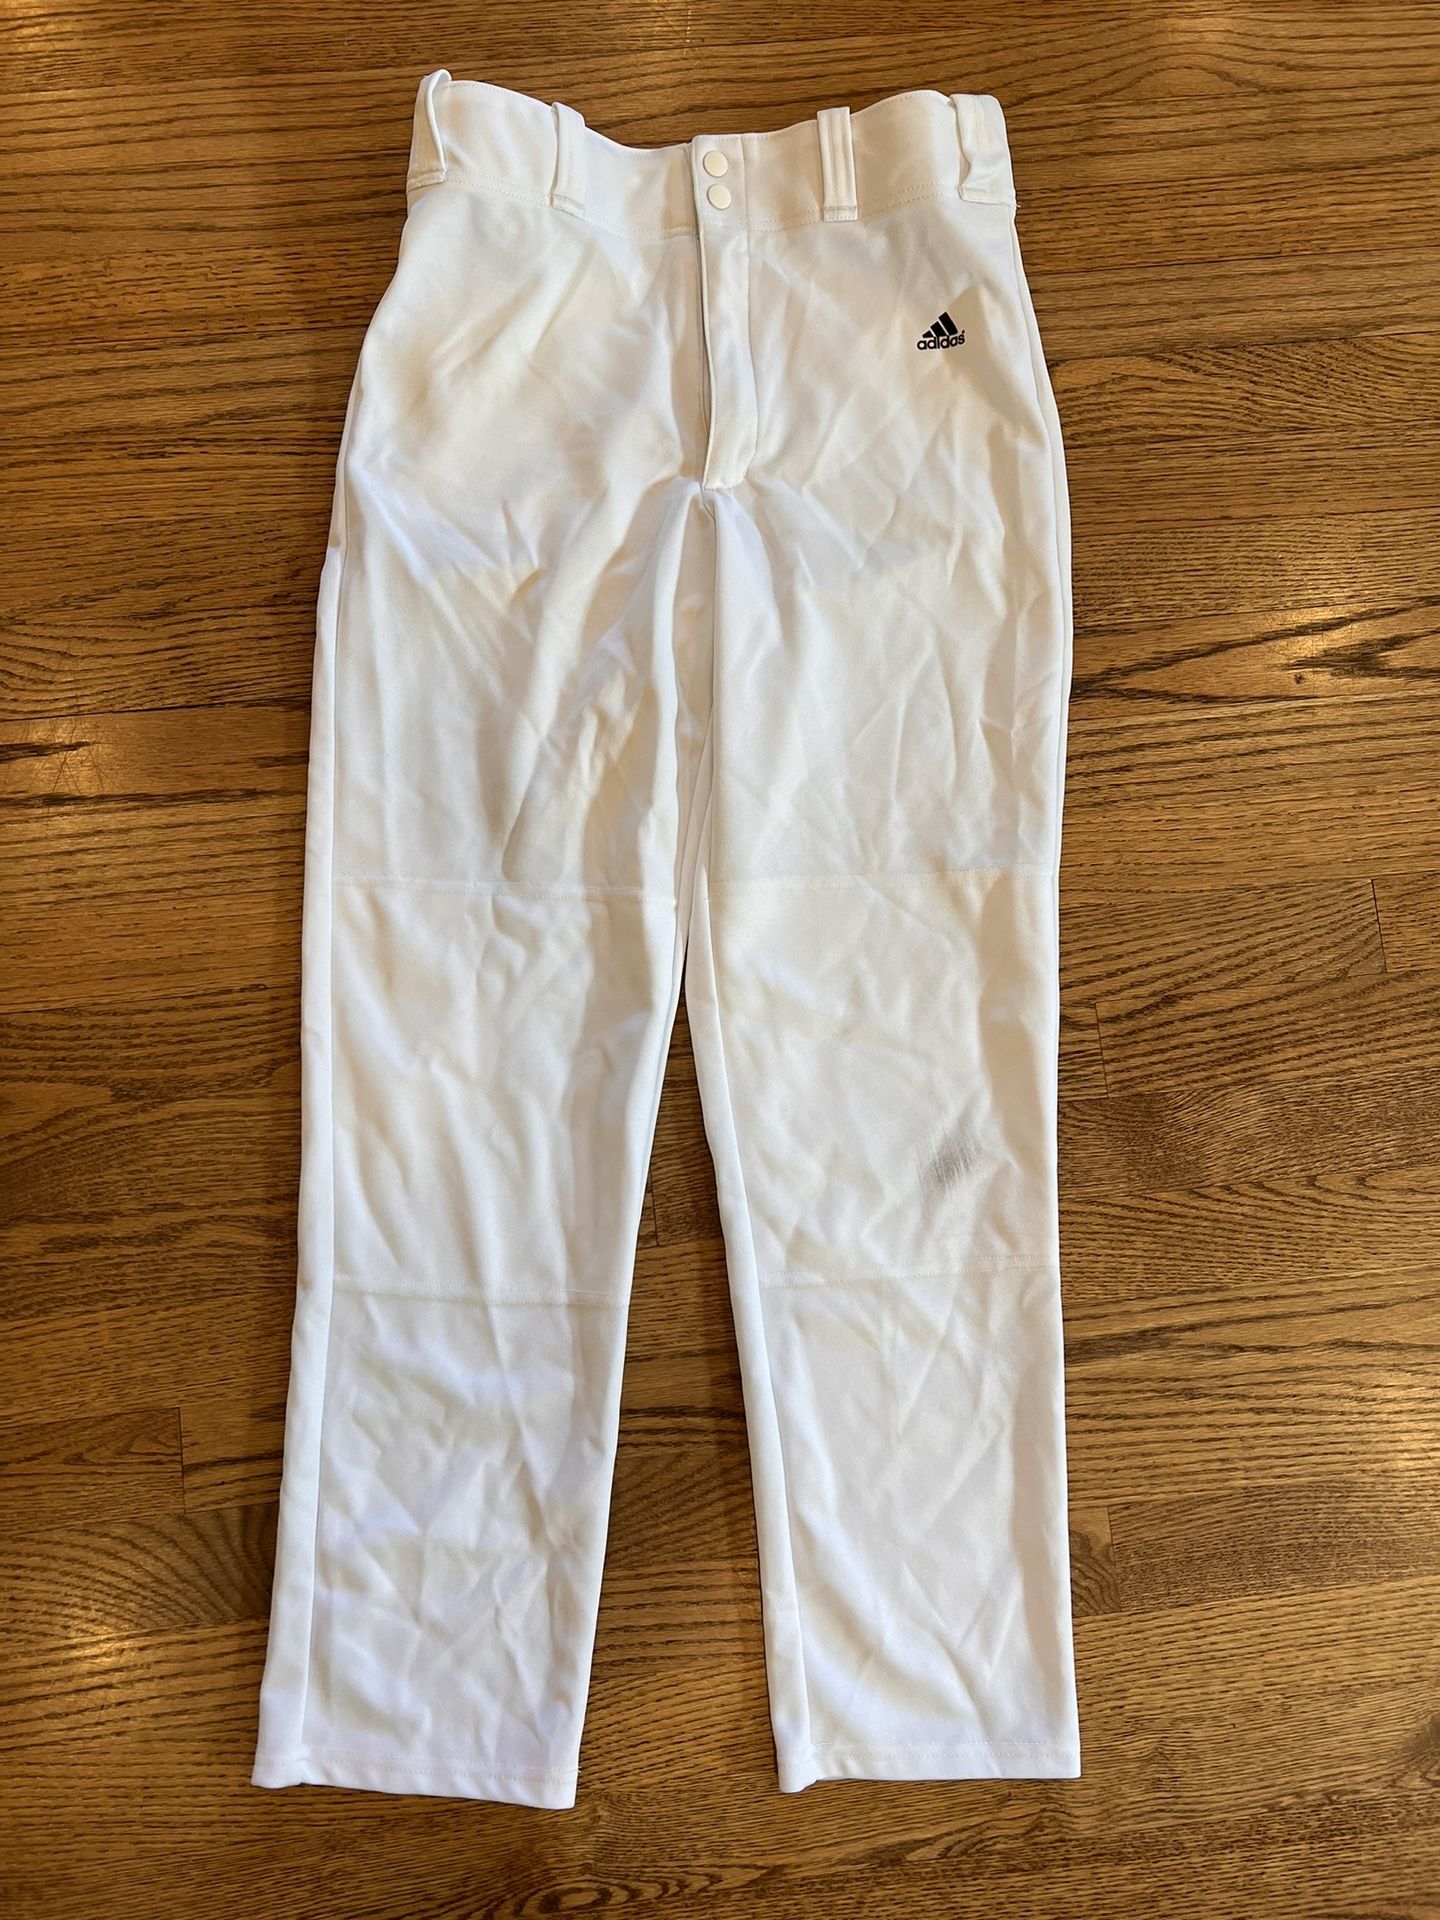 Adidas White Baseball Pants